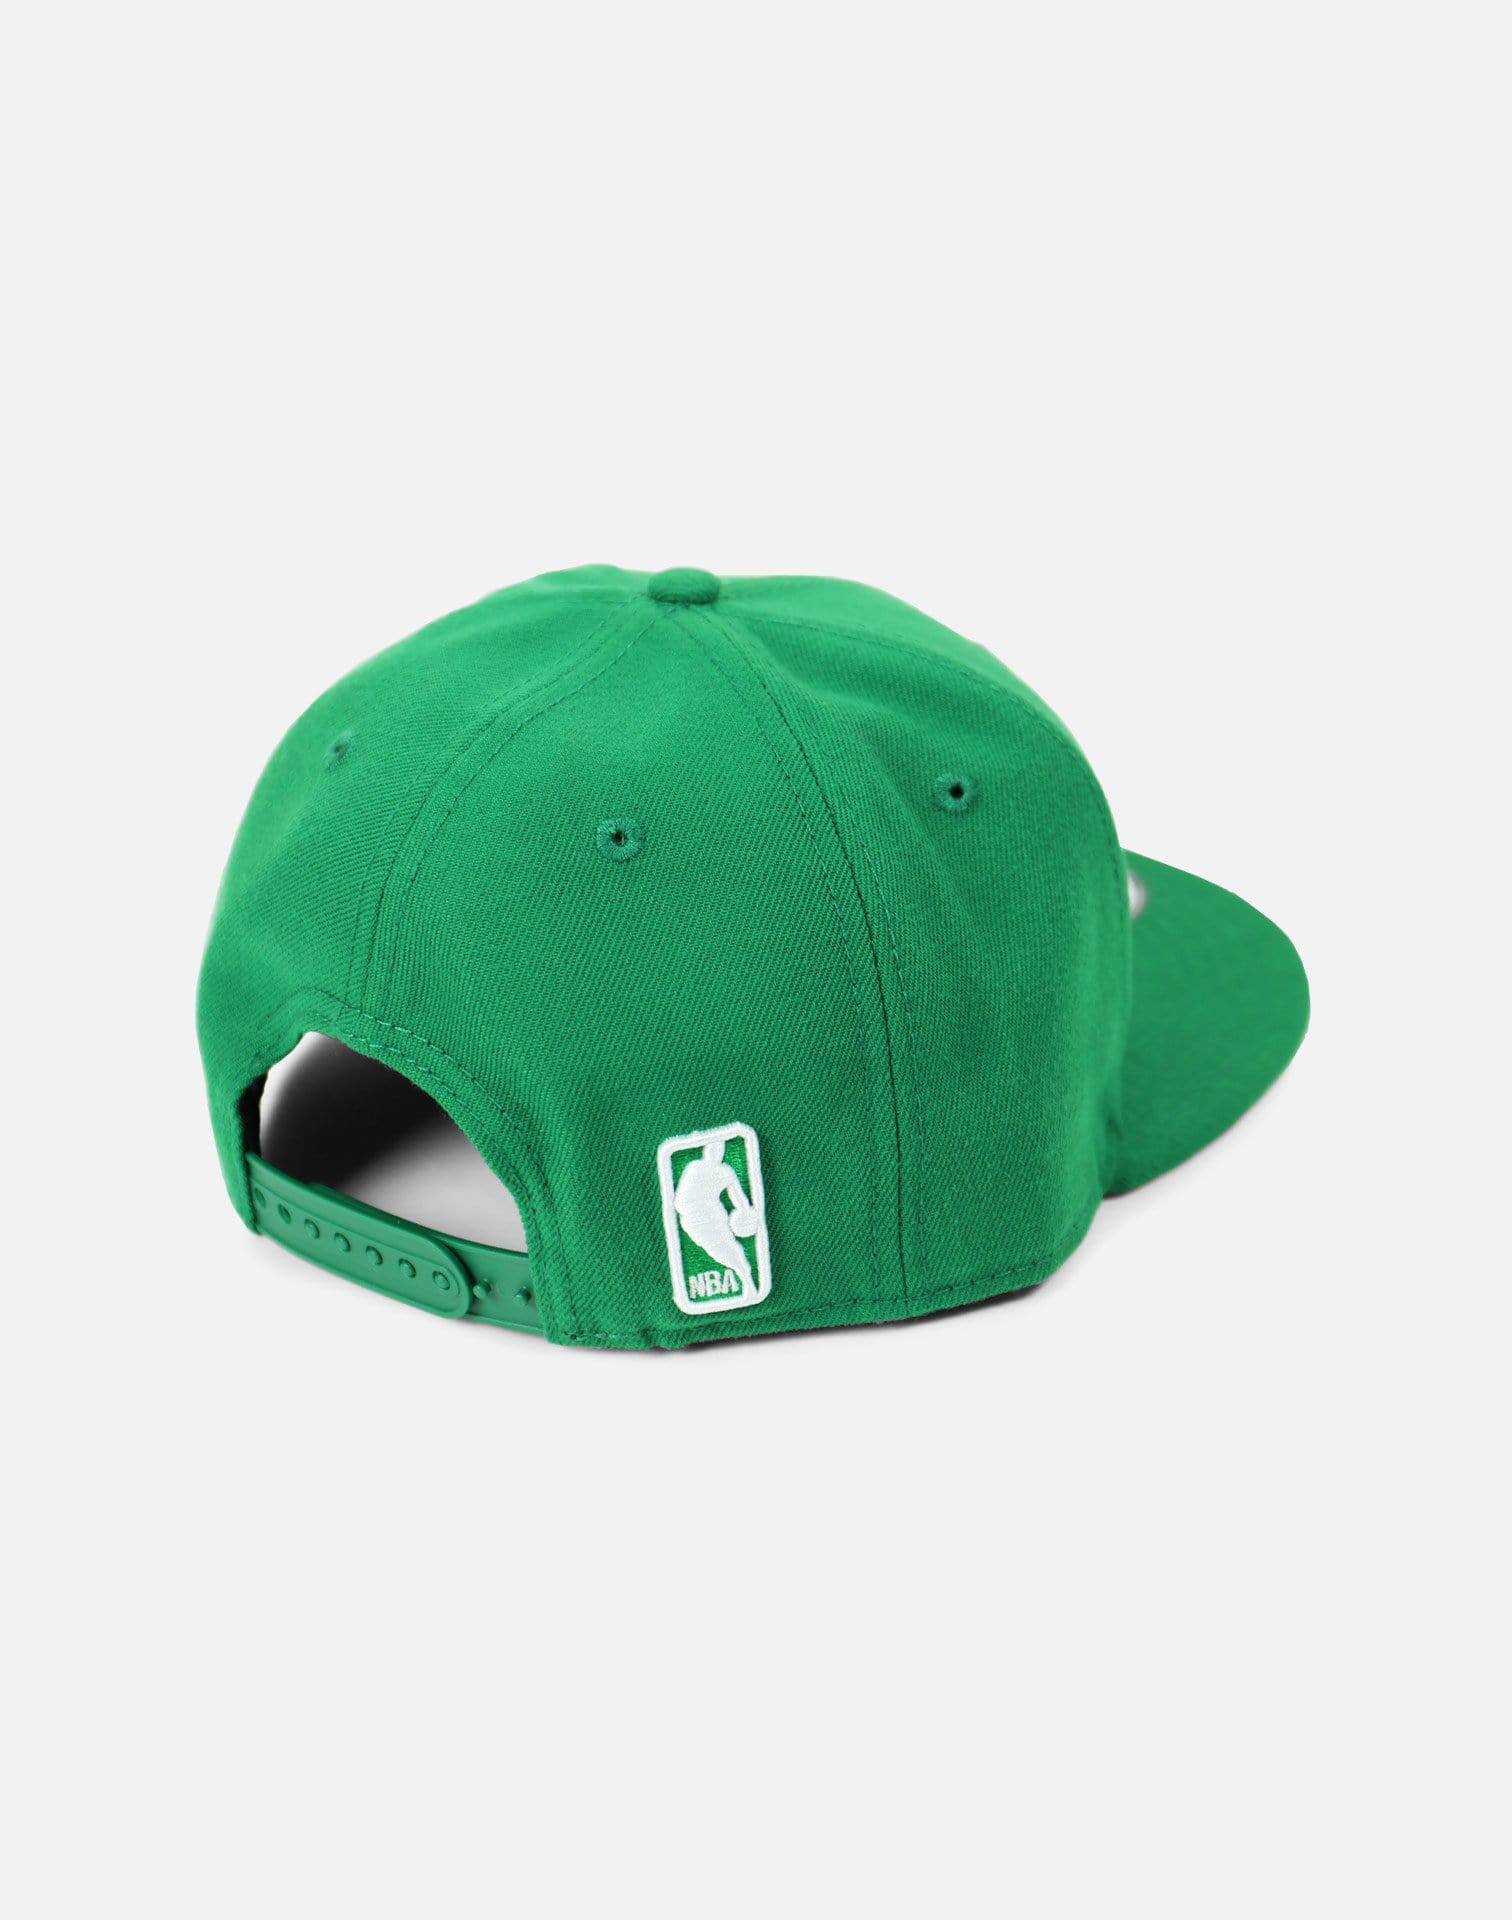 RUVilla.com is where to buy the New Era Boston Celtics Basic OTC Snapback Hat (Green)!